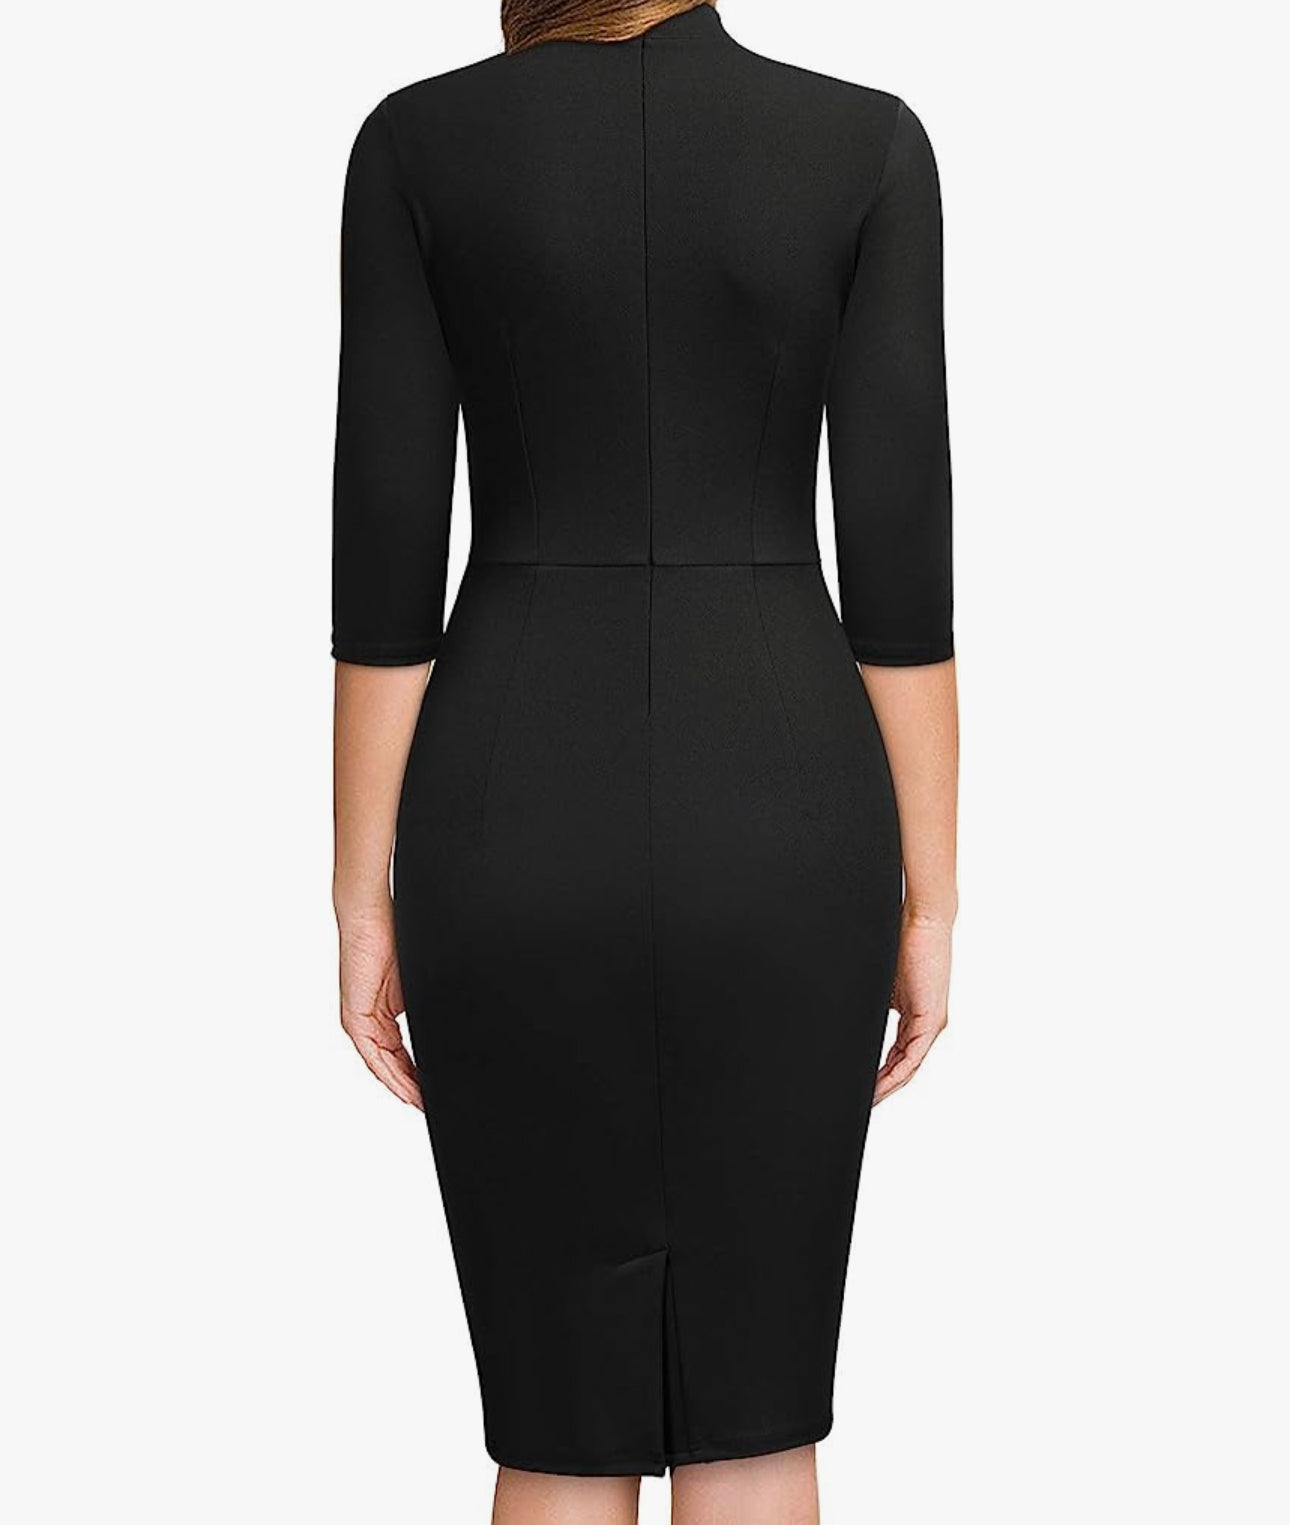 Vintage Inspired Half Collar Dress, US Sizes Small - XXLarge (BLACK DR